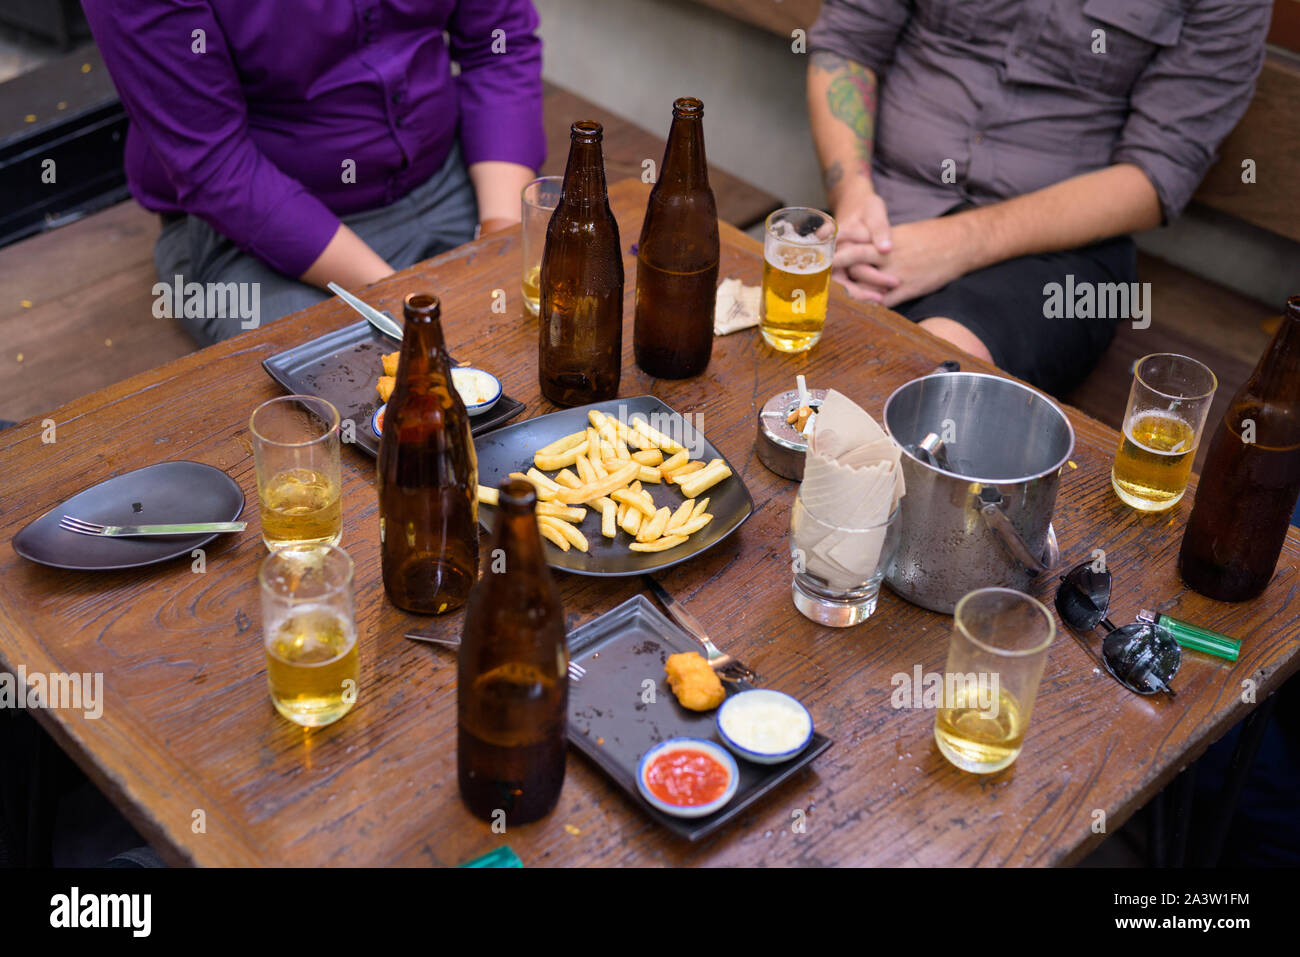 Hombres tomando alcohol fotografías e imágenes de alta resolución - Alamy